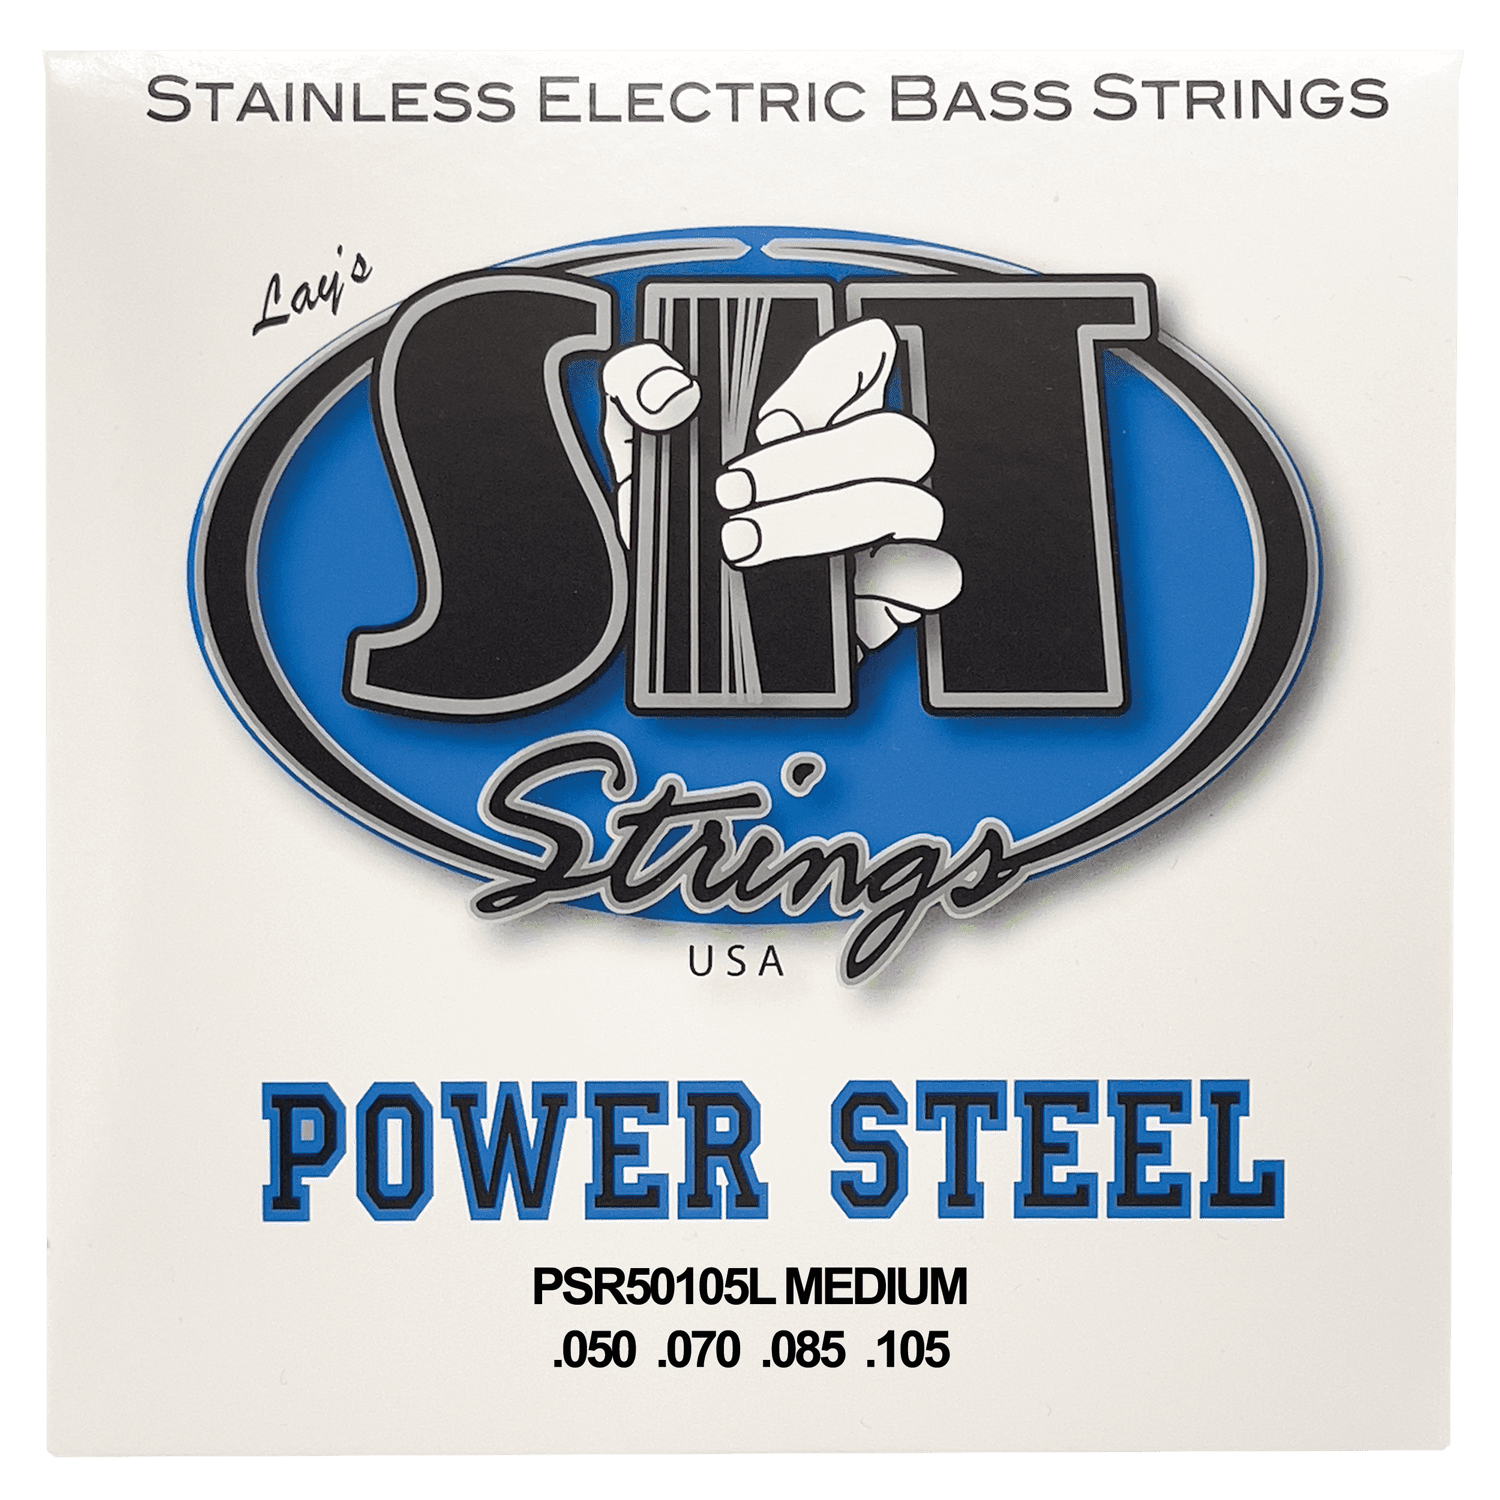 SIT POWER STEEL STAINLESS STEEL BASS - HIENDGUITAR PSR50105L MEDIUM PSR50105L MEDIUM SIT Bass Strings